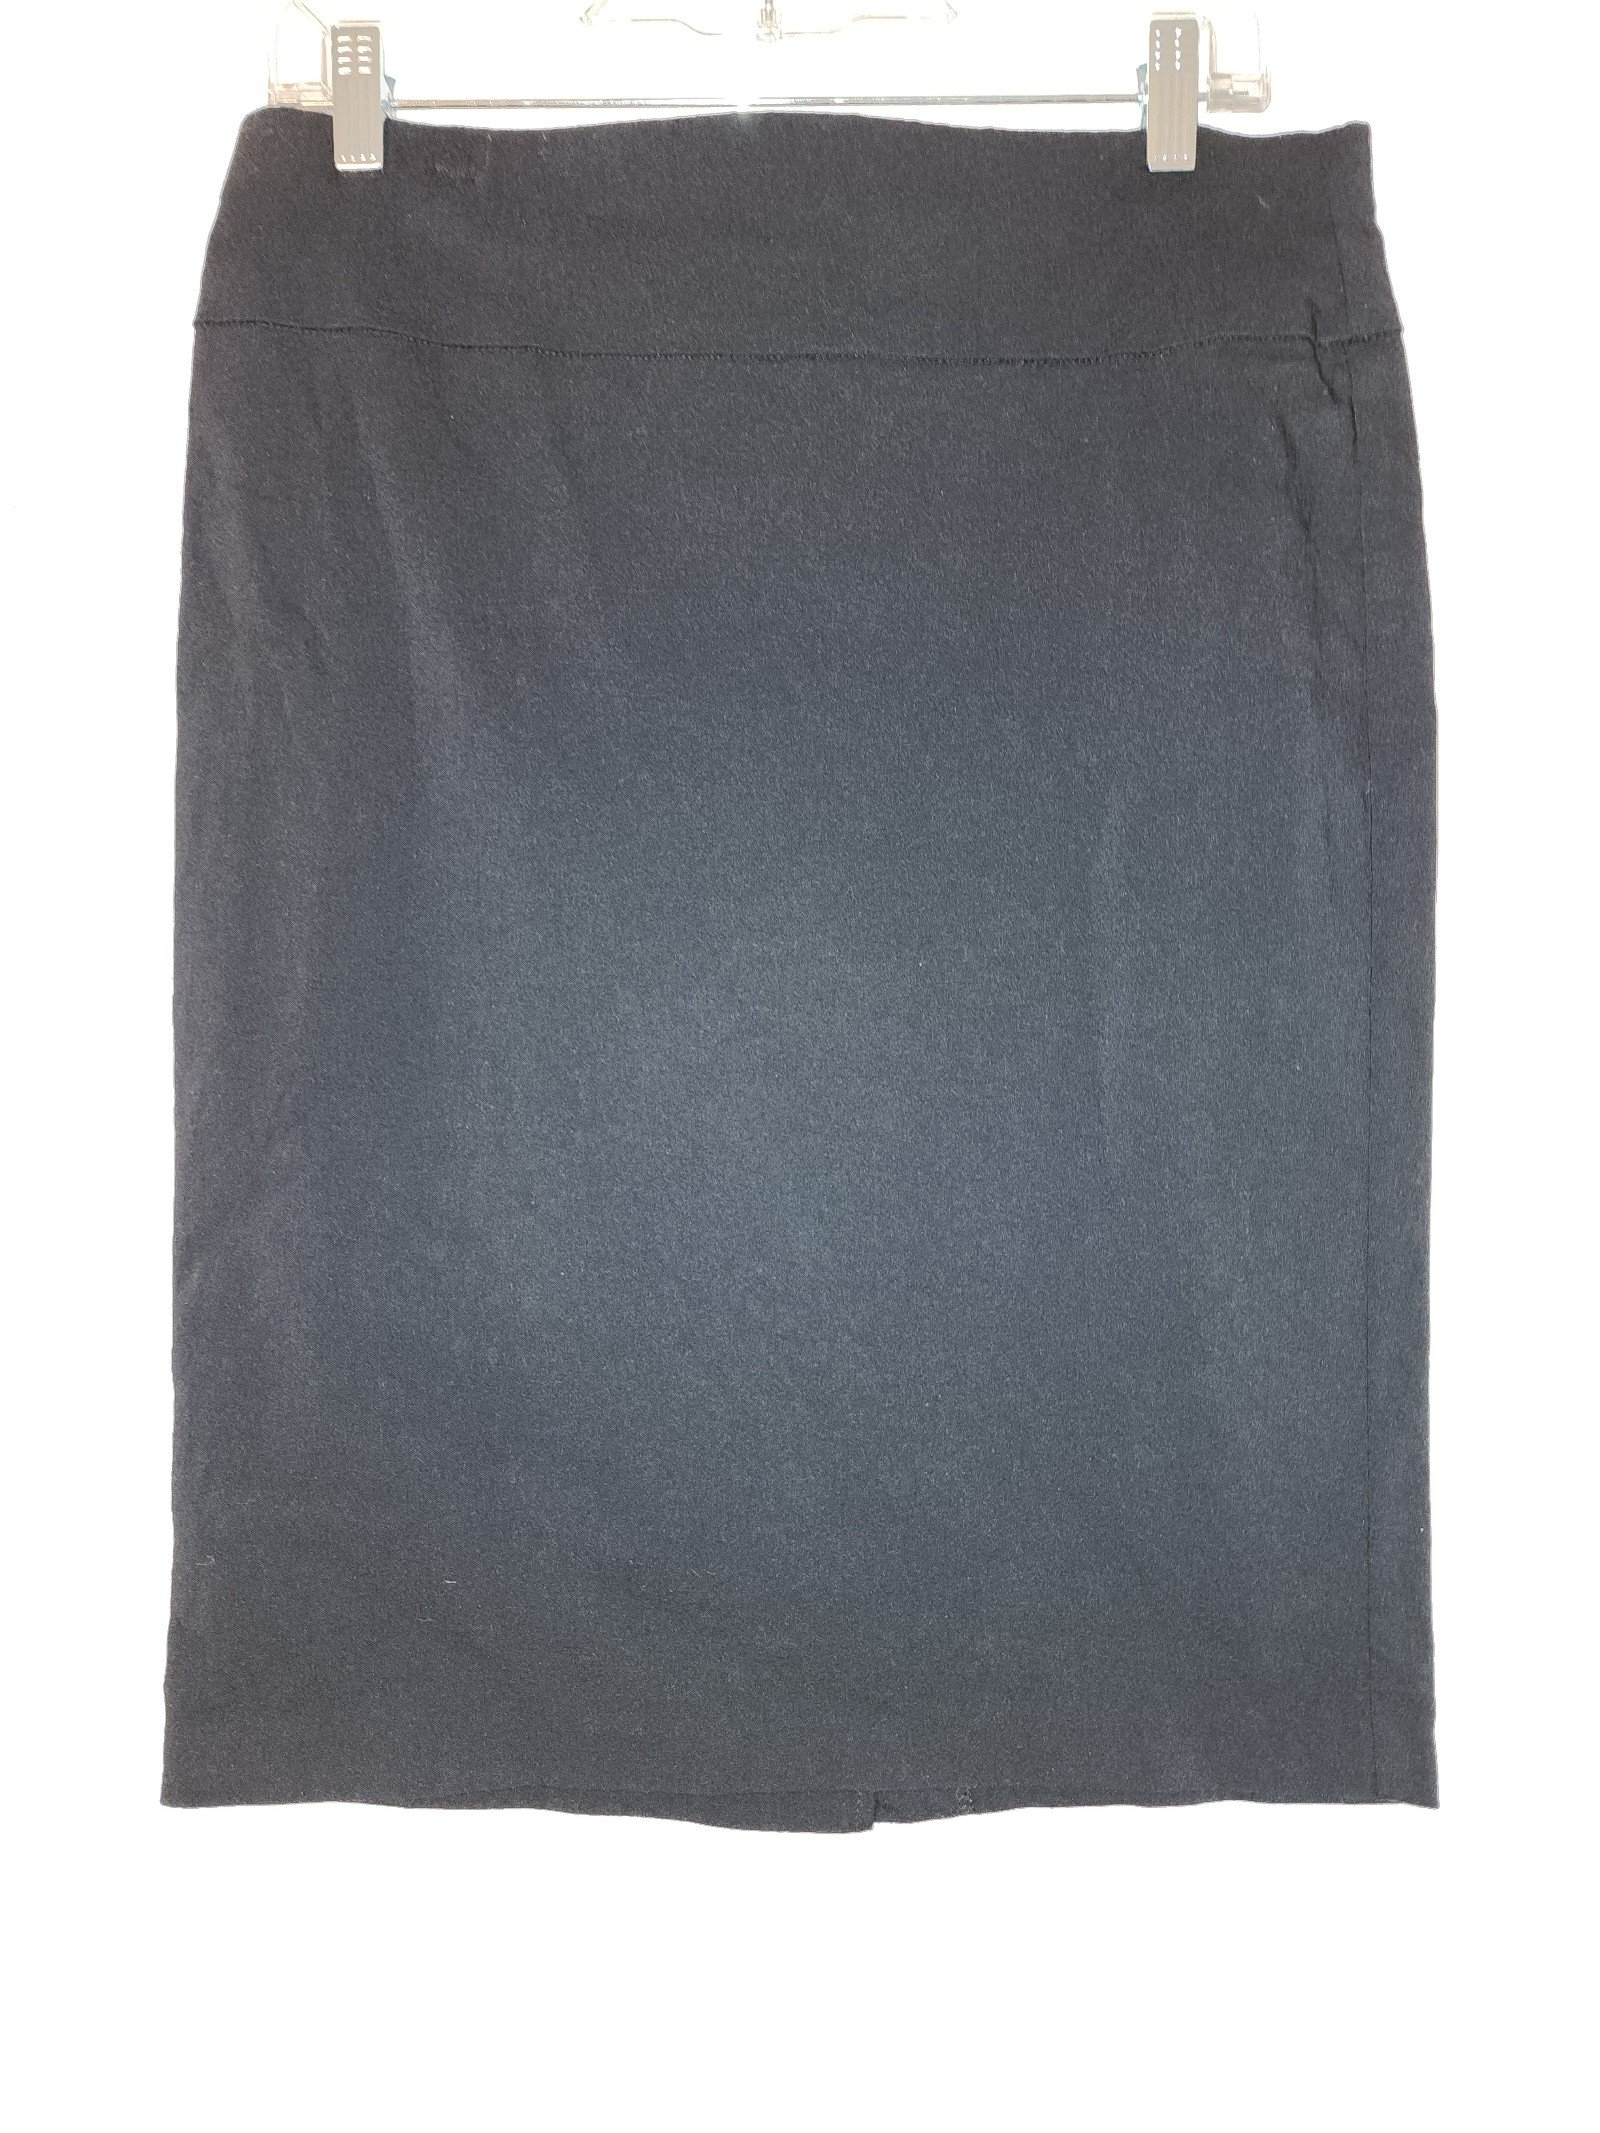 Maurices womens size 1x black knee length pencil skirt aNpw27ELh